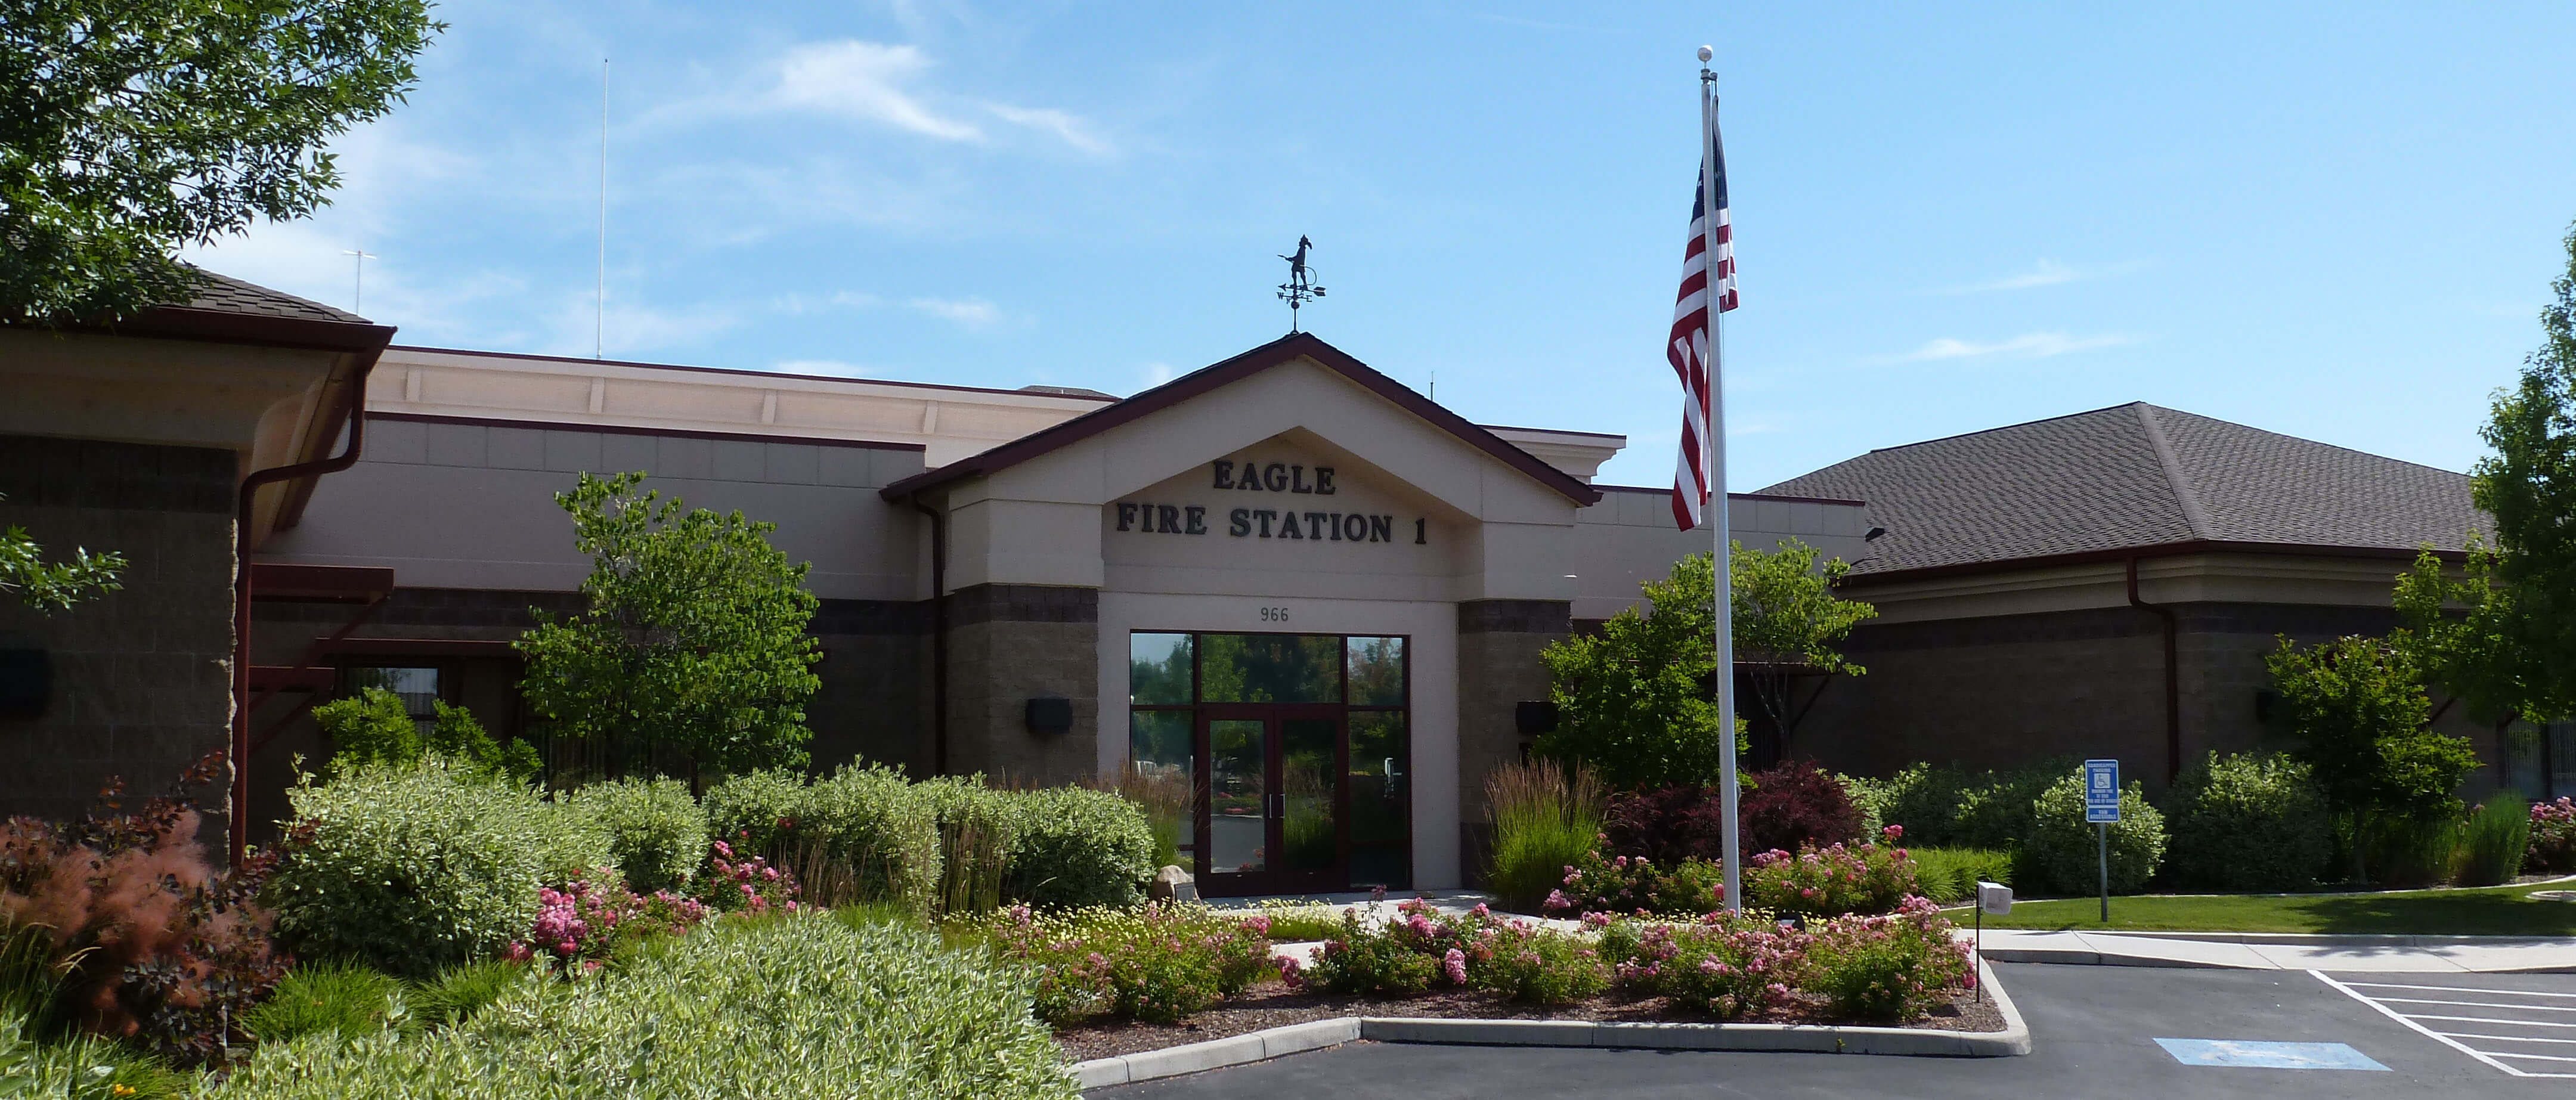 Images/Eagle Fire Stations 002.jpg